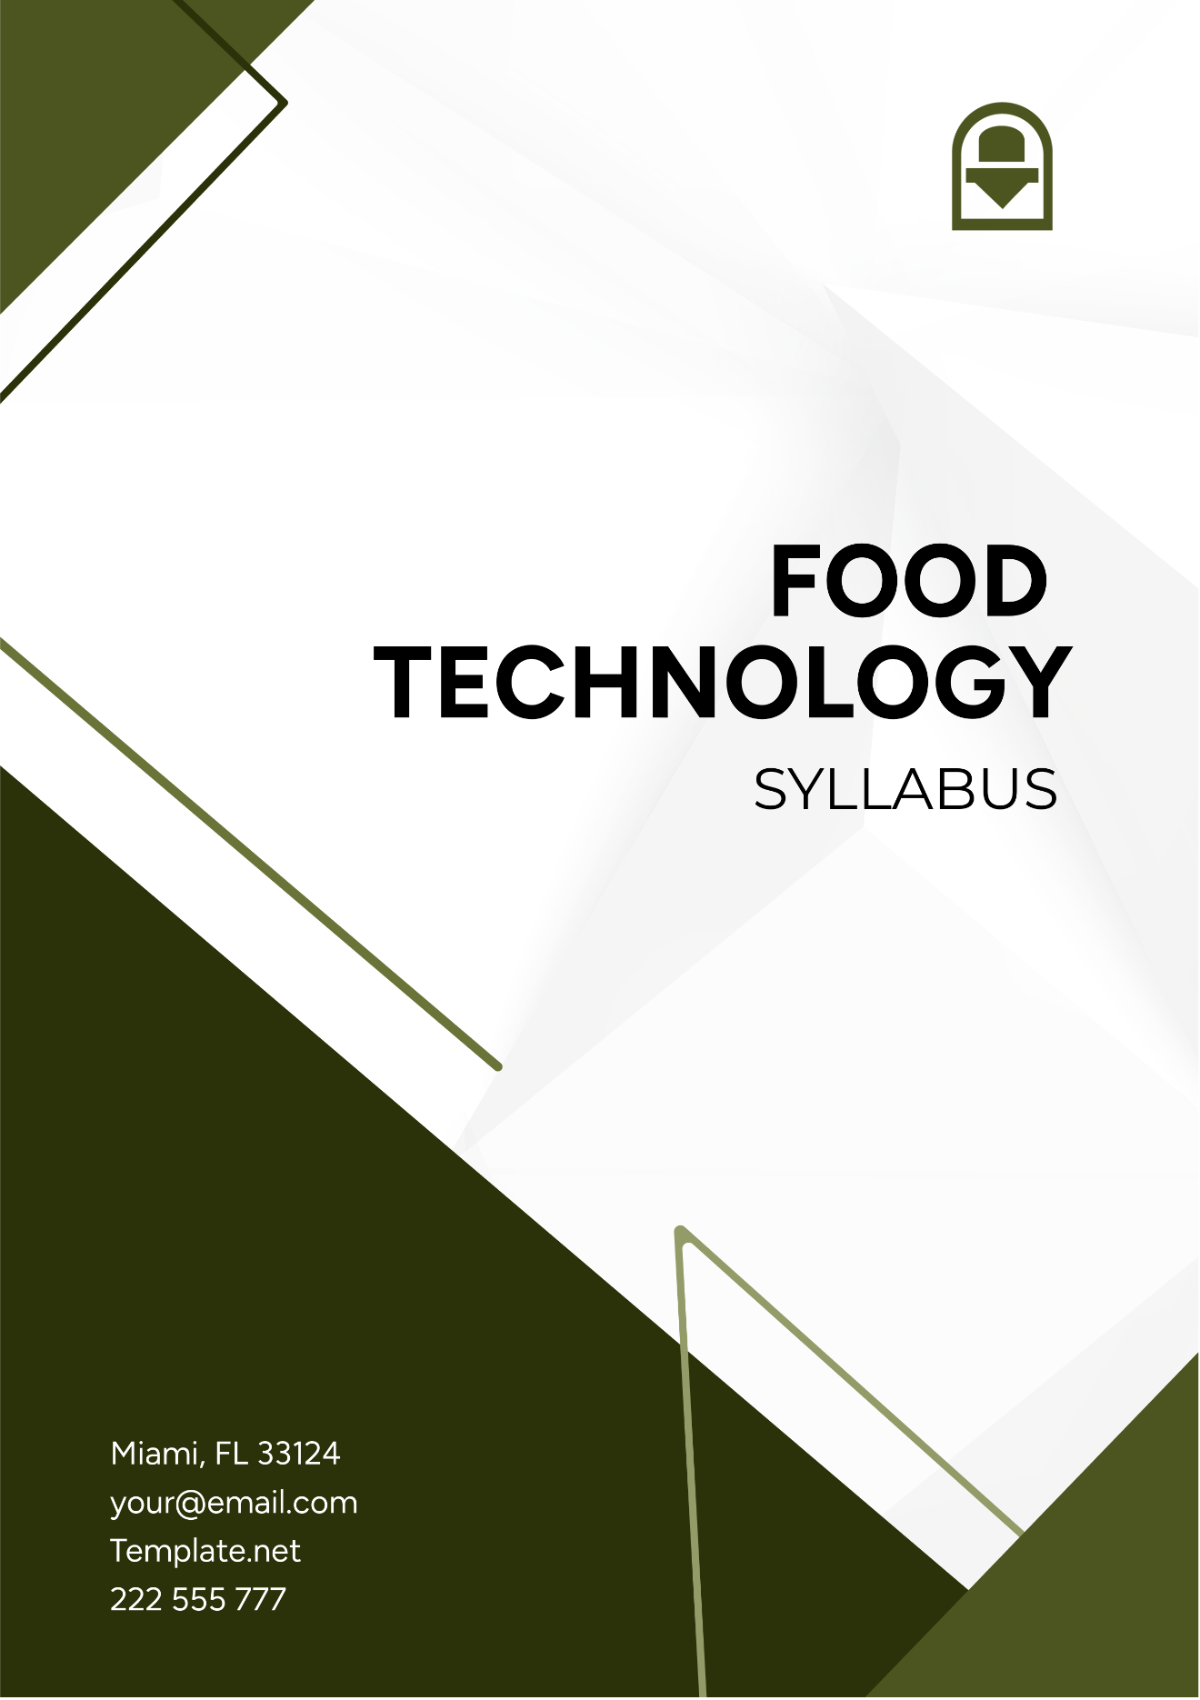 Food Technology Syllabus Template